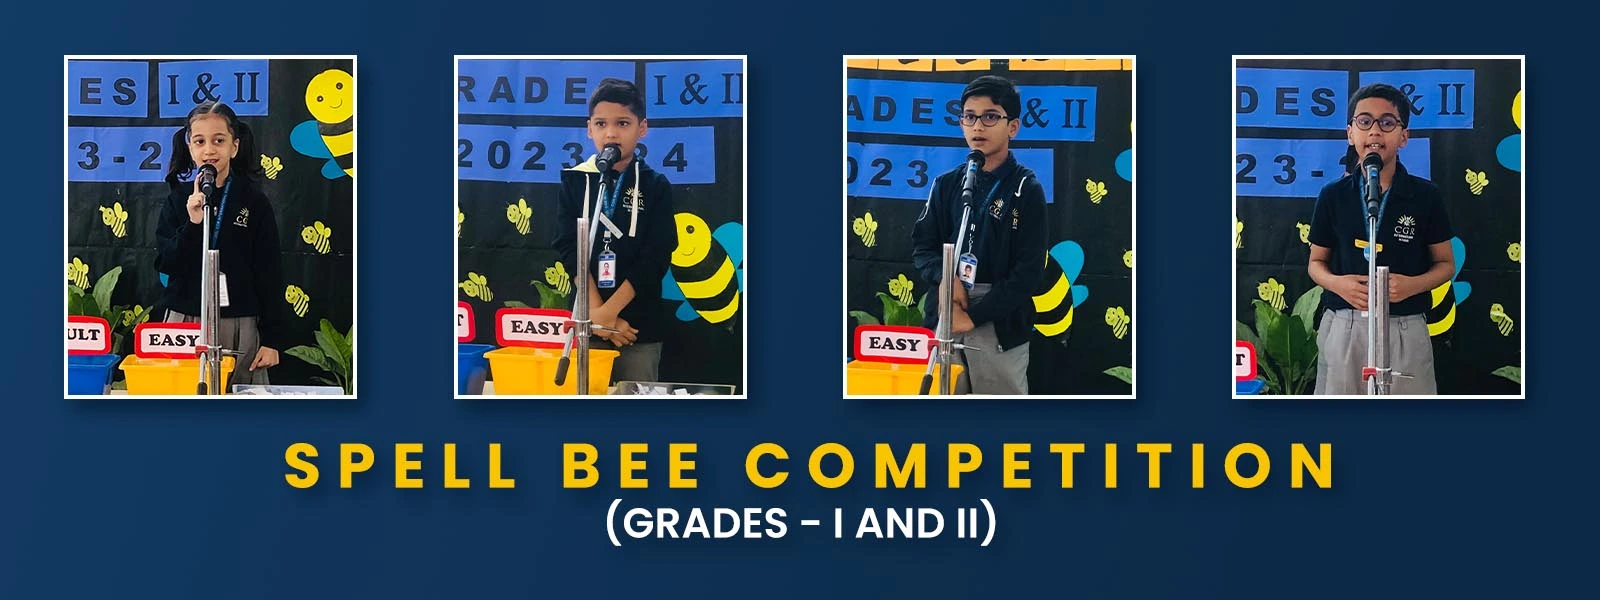 Spell-Bee-Competition-desktop  - CGR International School - Best School in Madhapur / Hyderabad